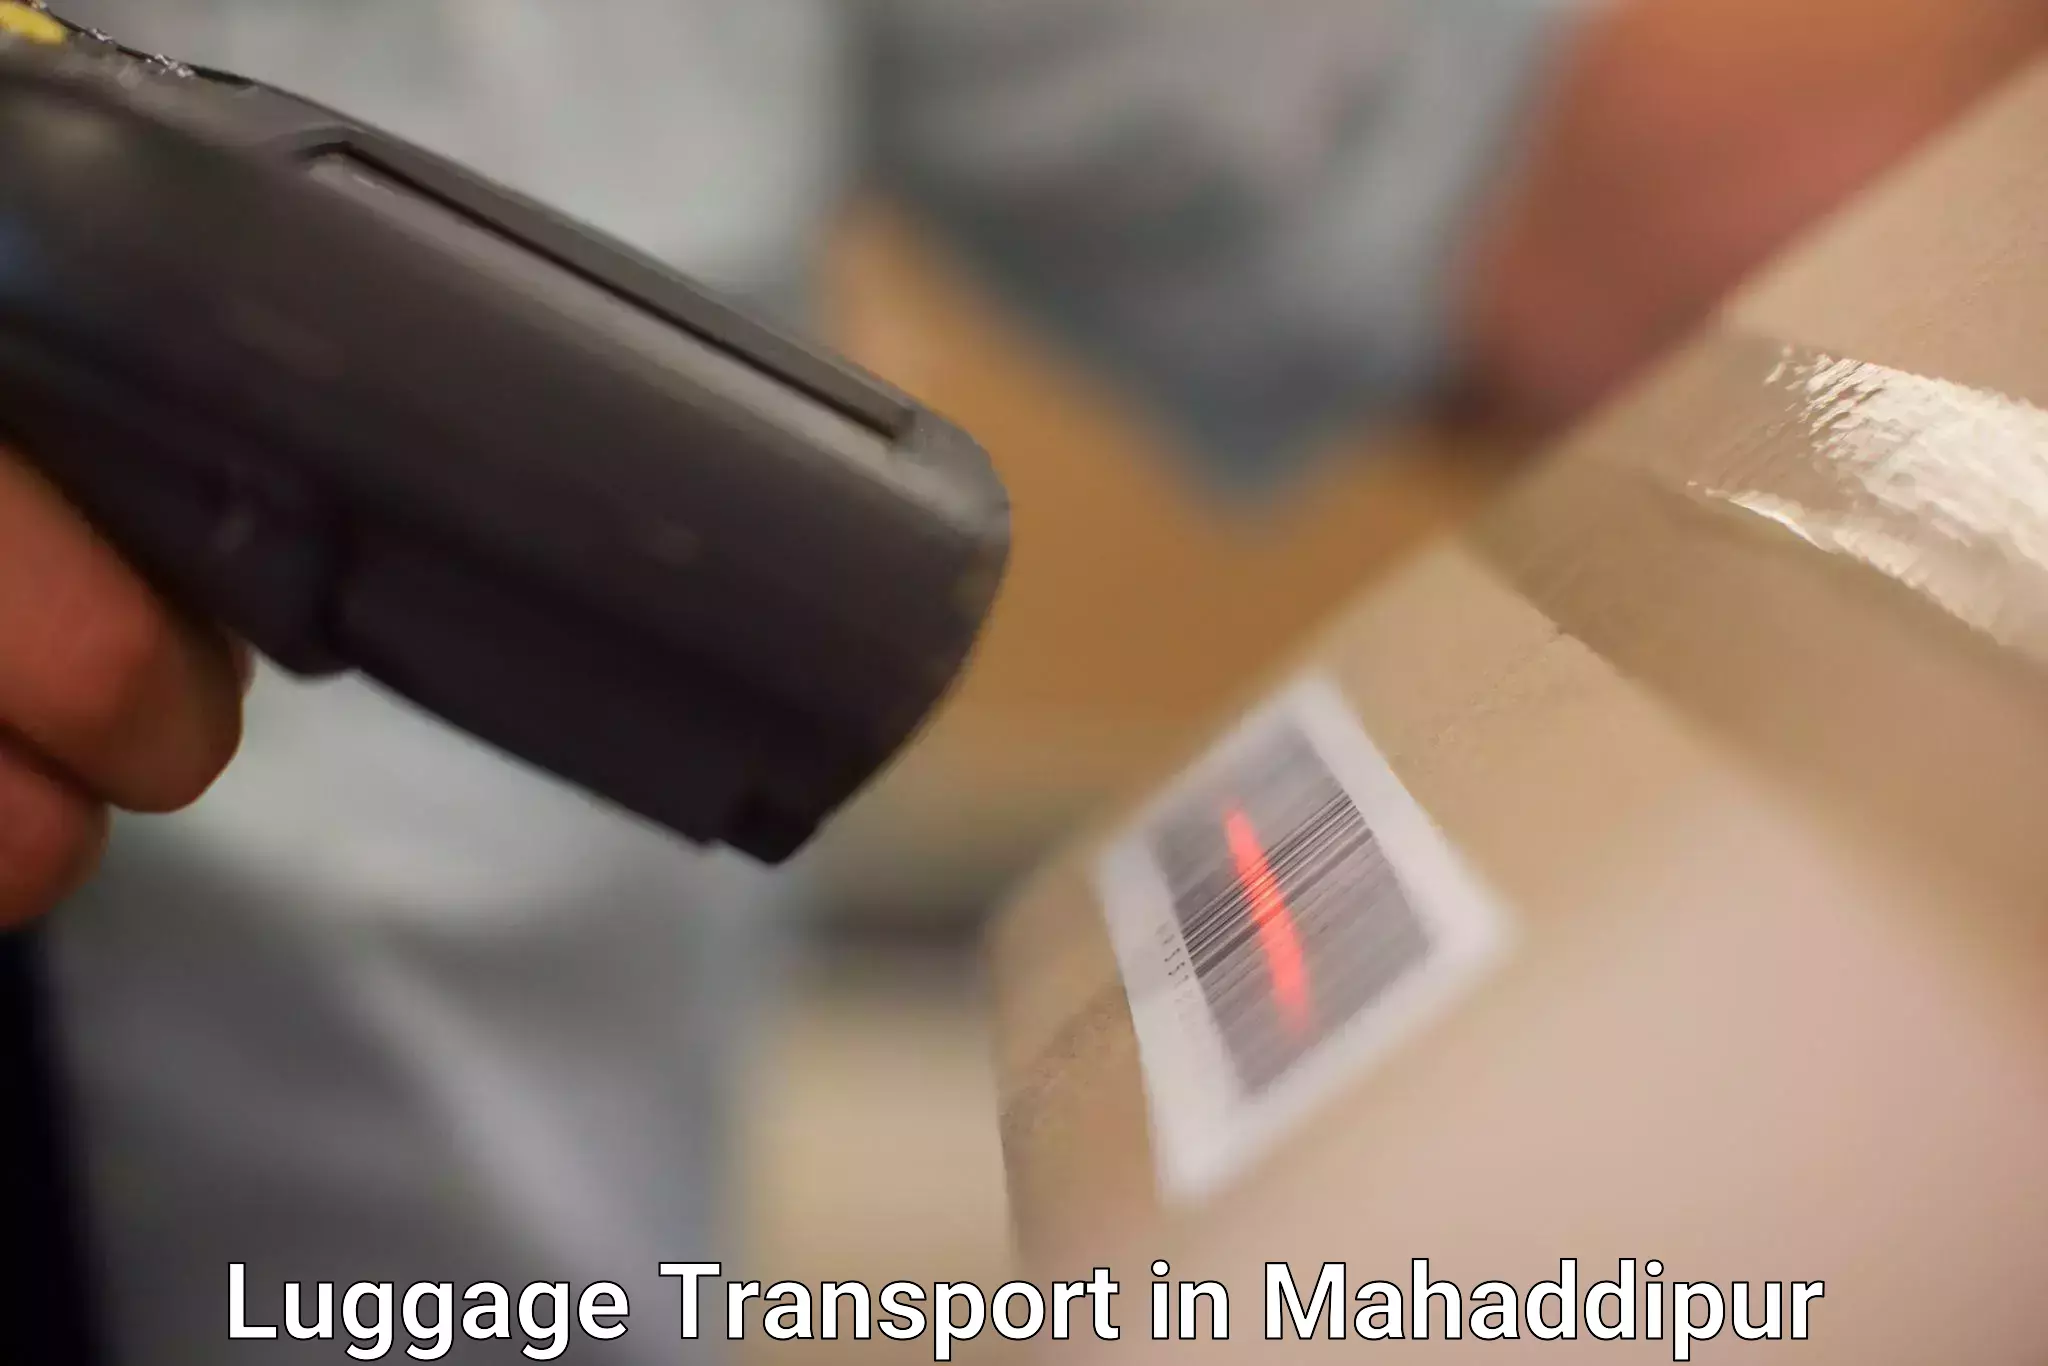 Luggage transport pricing in Mahaddipur